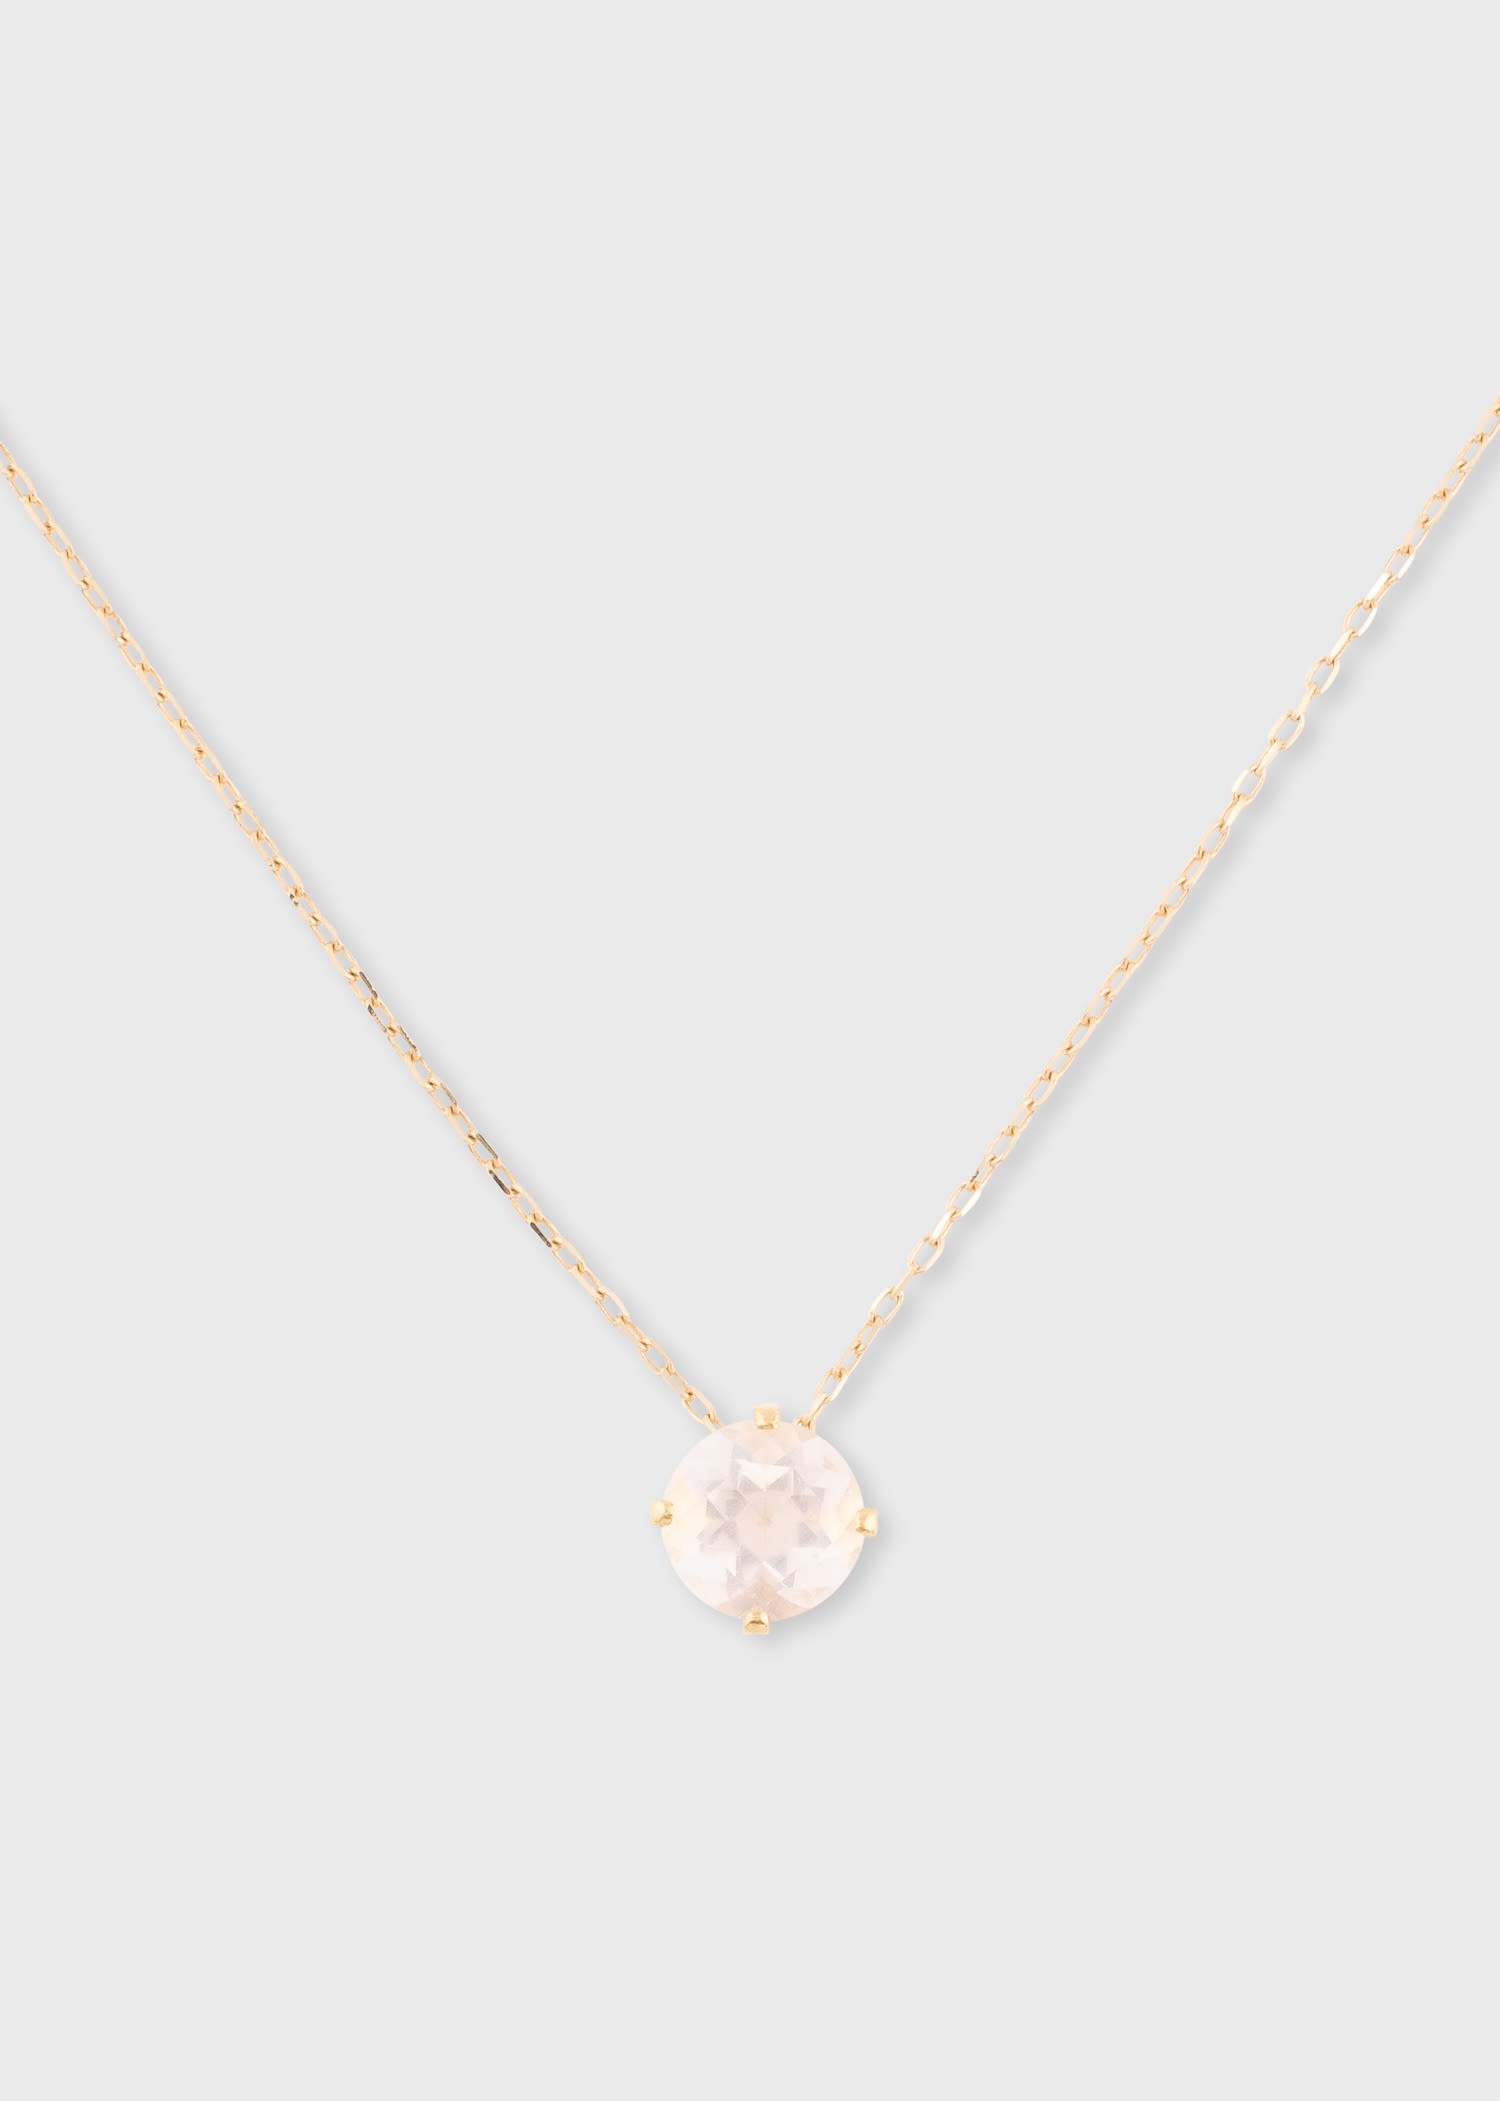 'Taida' Pink Quartz Necklace by Helena Rohner - 1